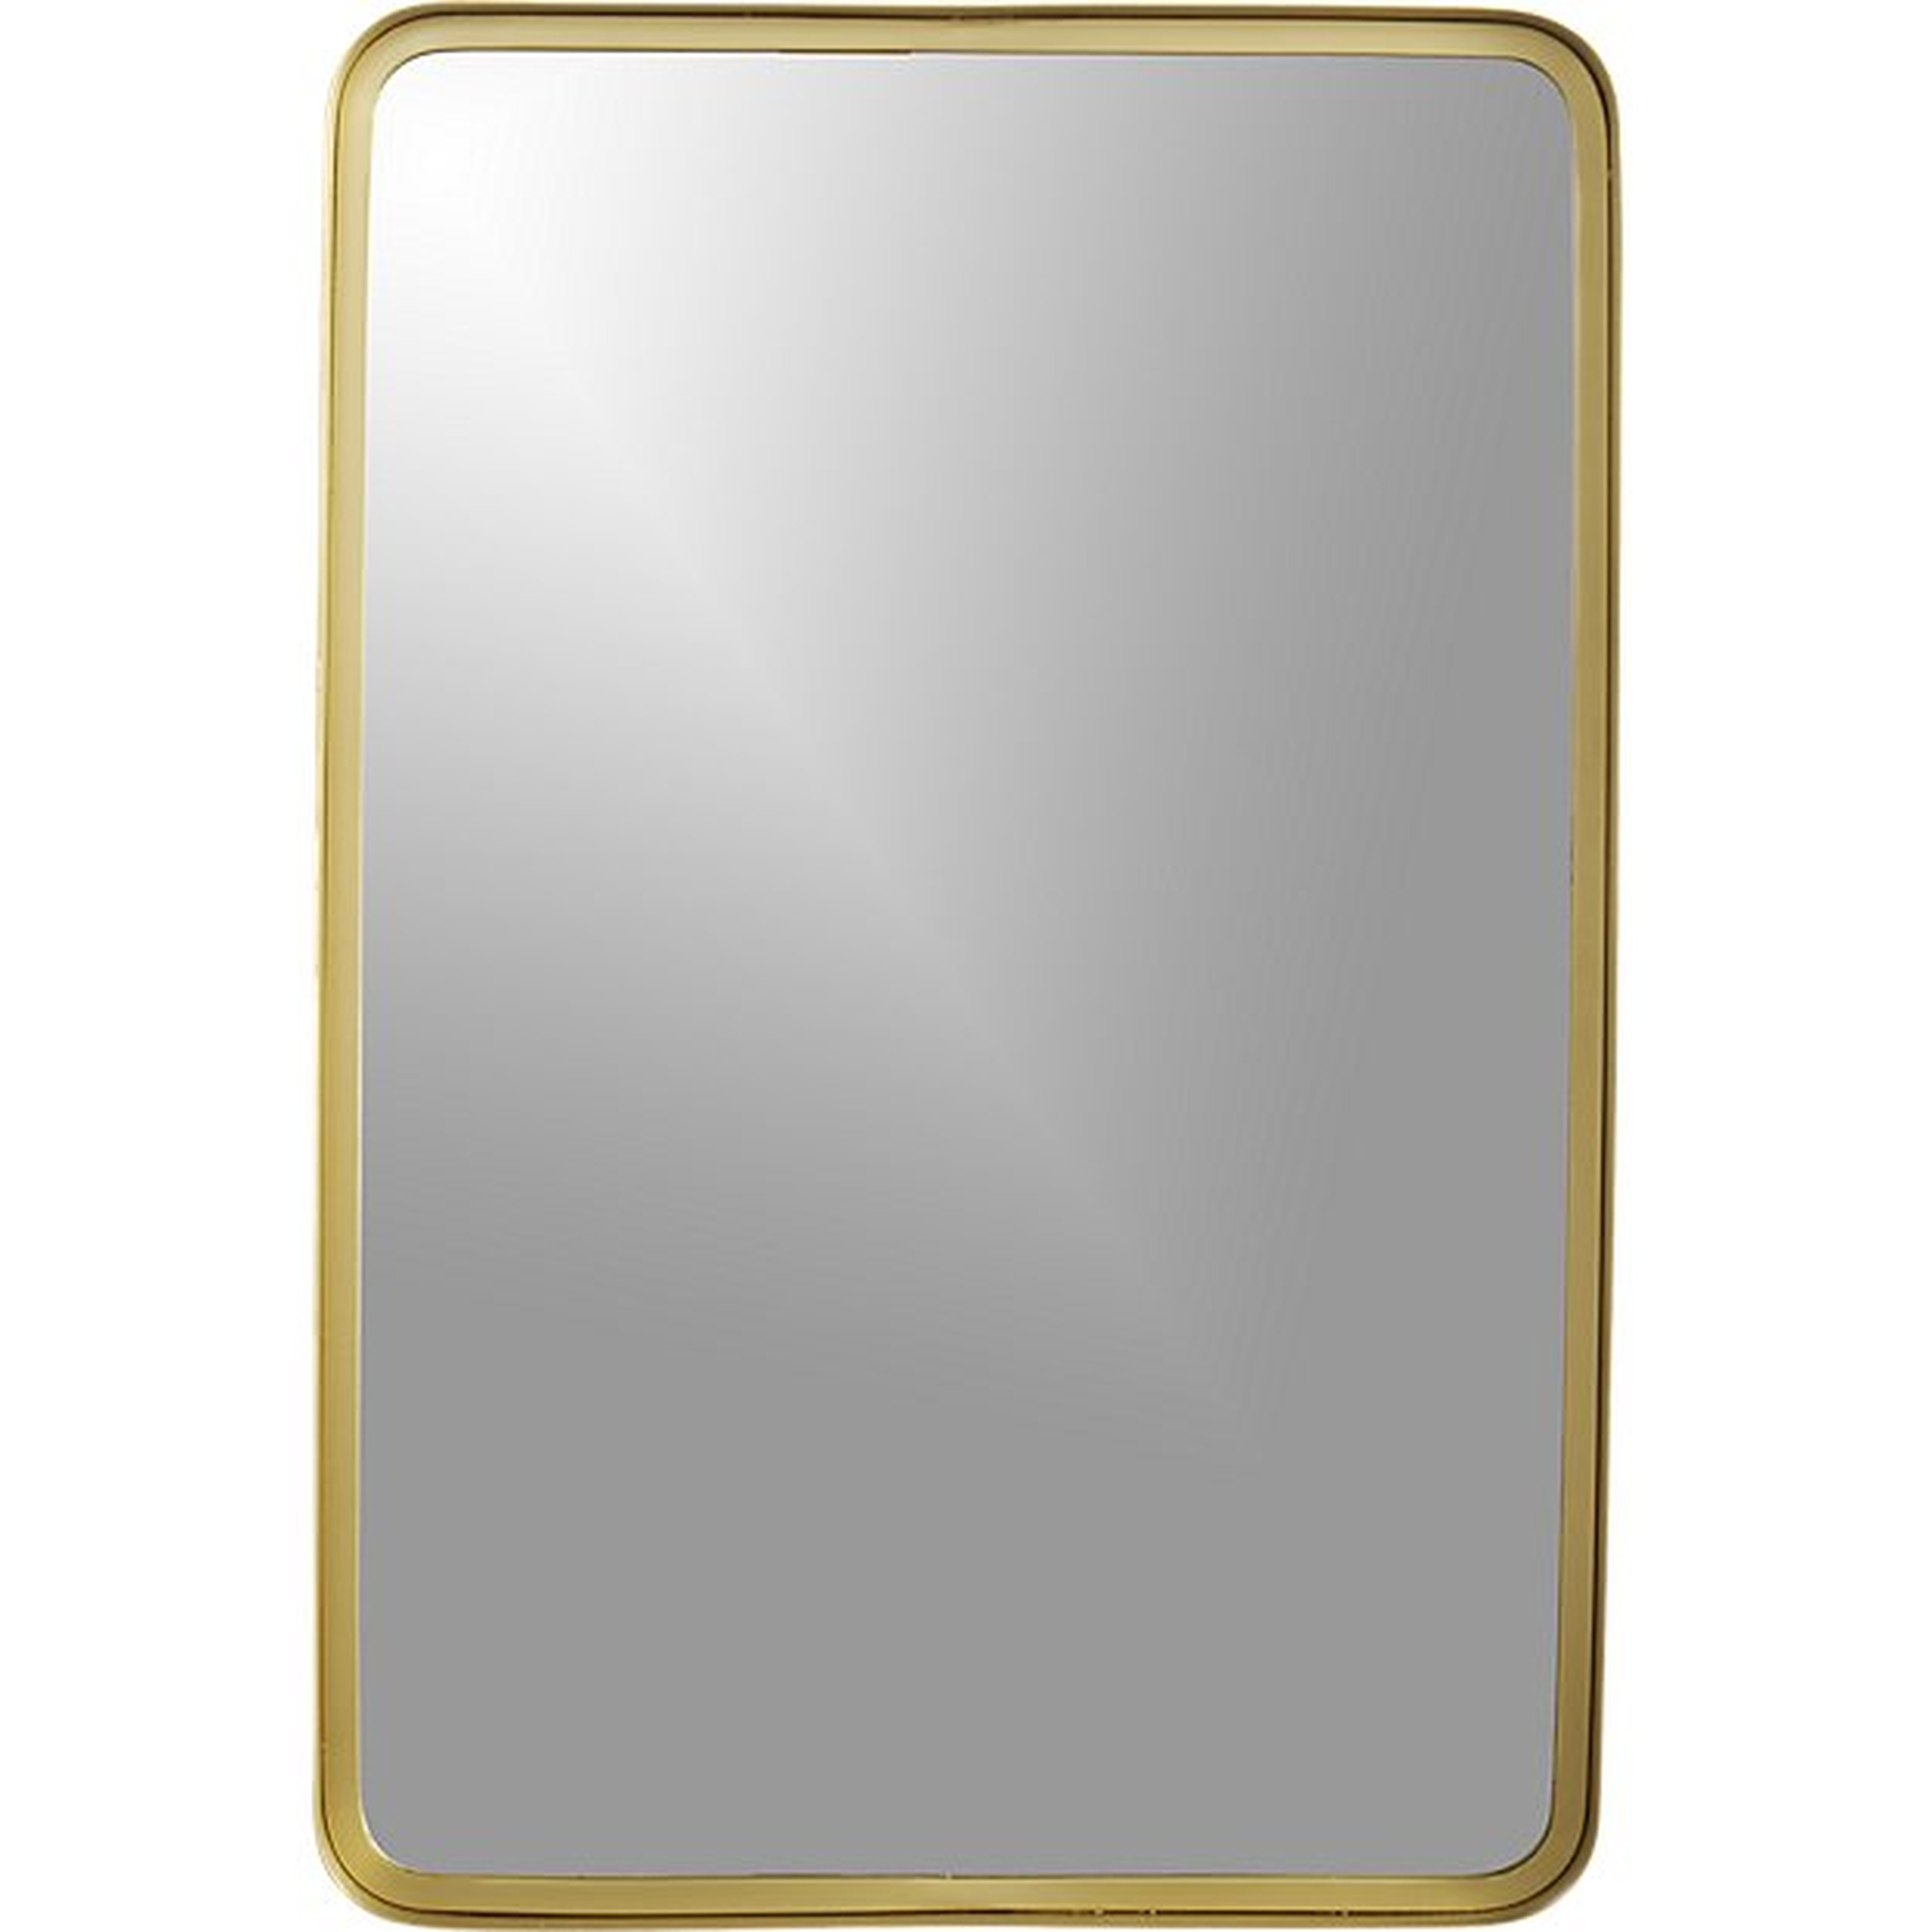 Croft brass wall mirror - CB2